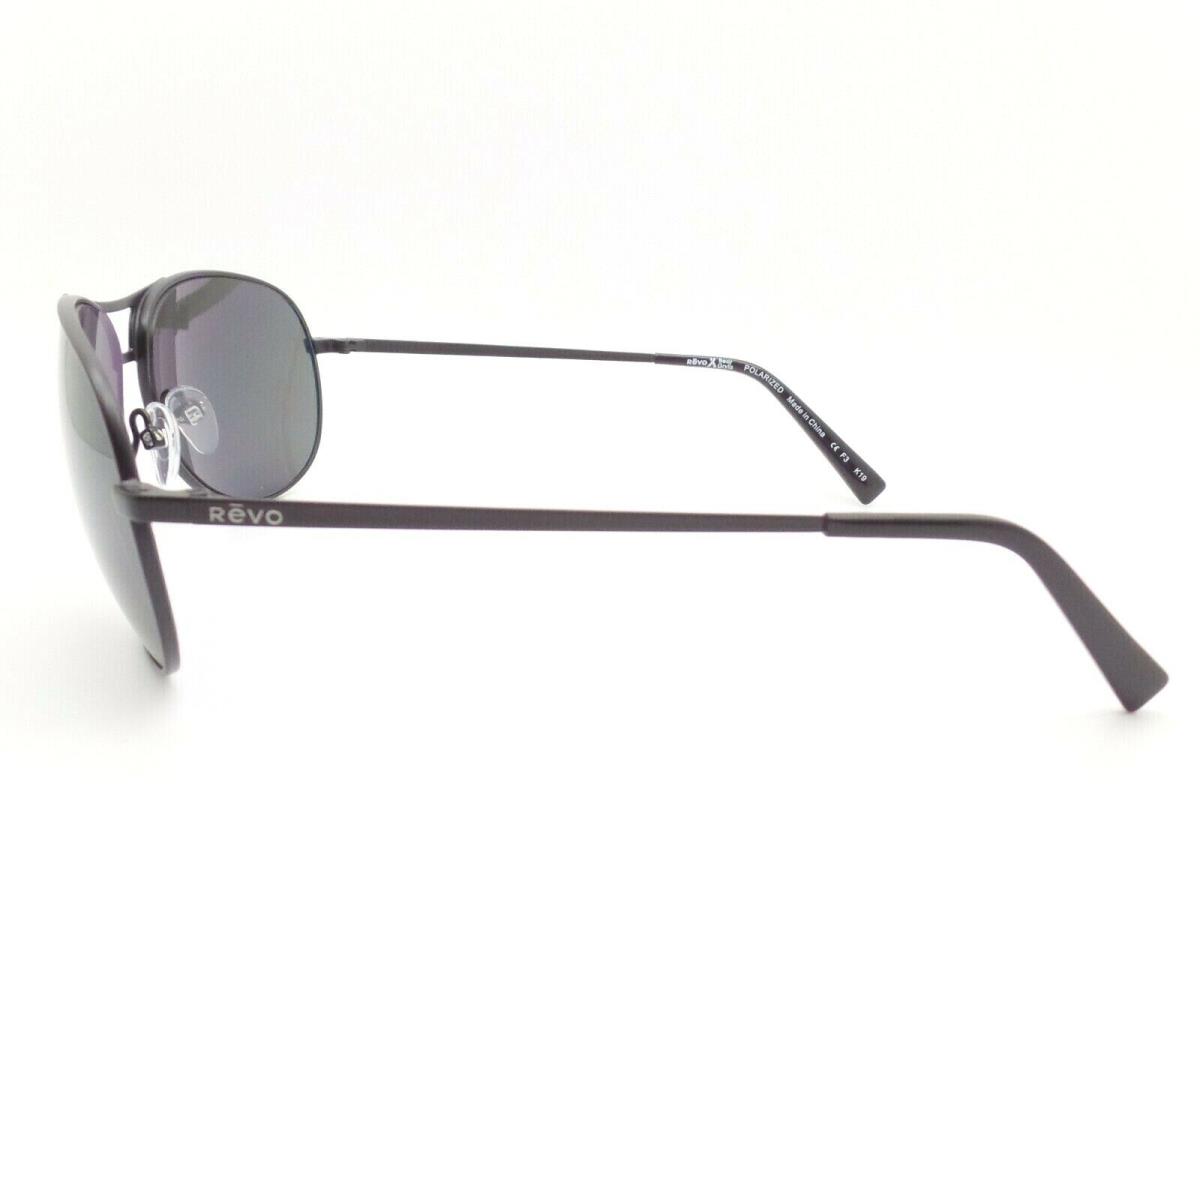 Revo sunglasses Prosper Bear Grylls - Matte Black